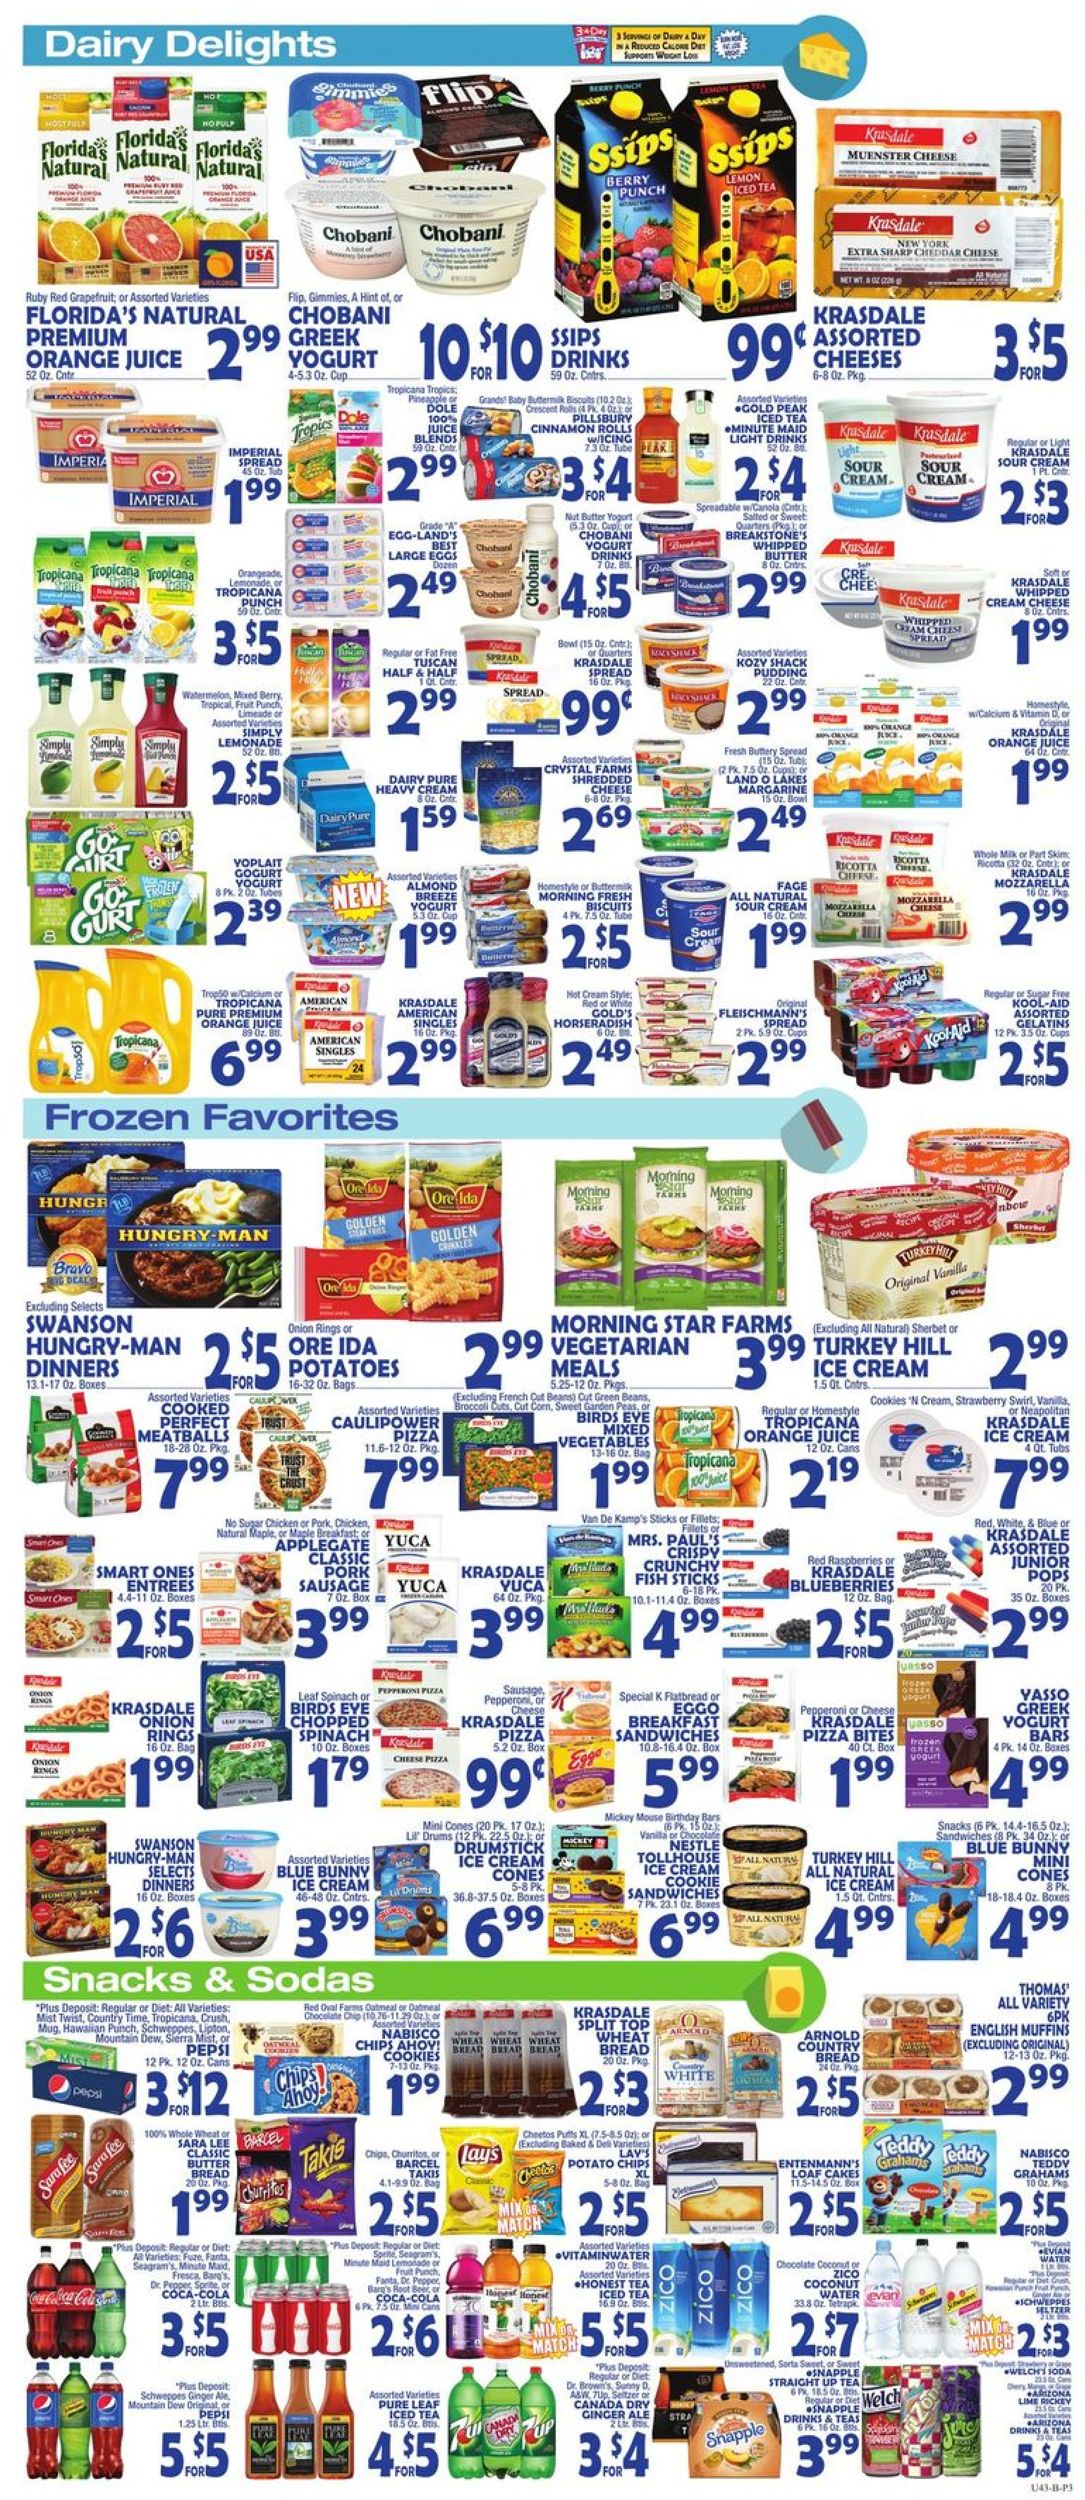 Catalogue Bravo Supermarkets from 09/27/2019